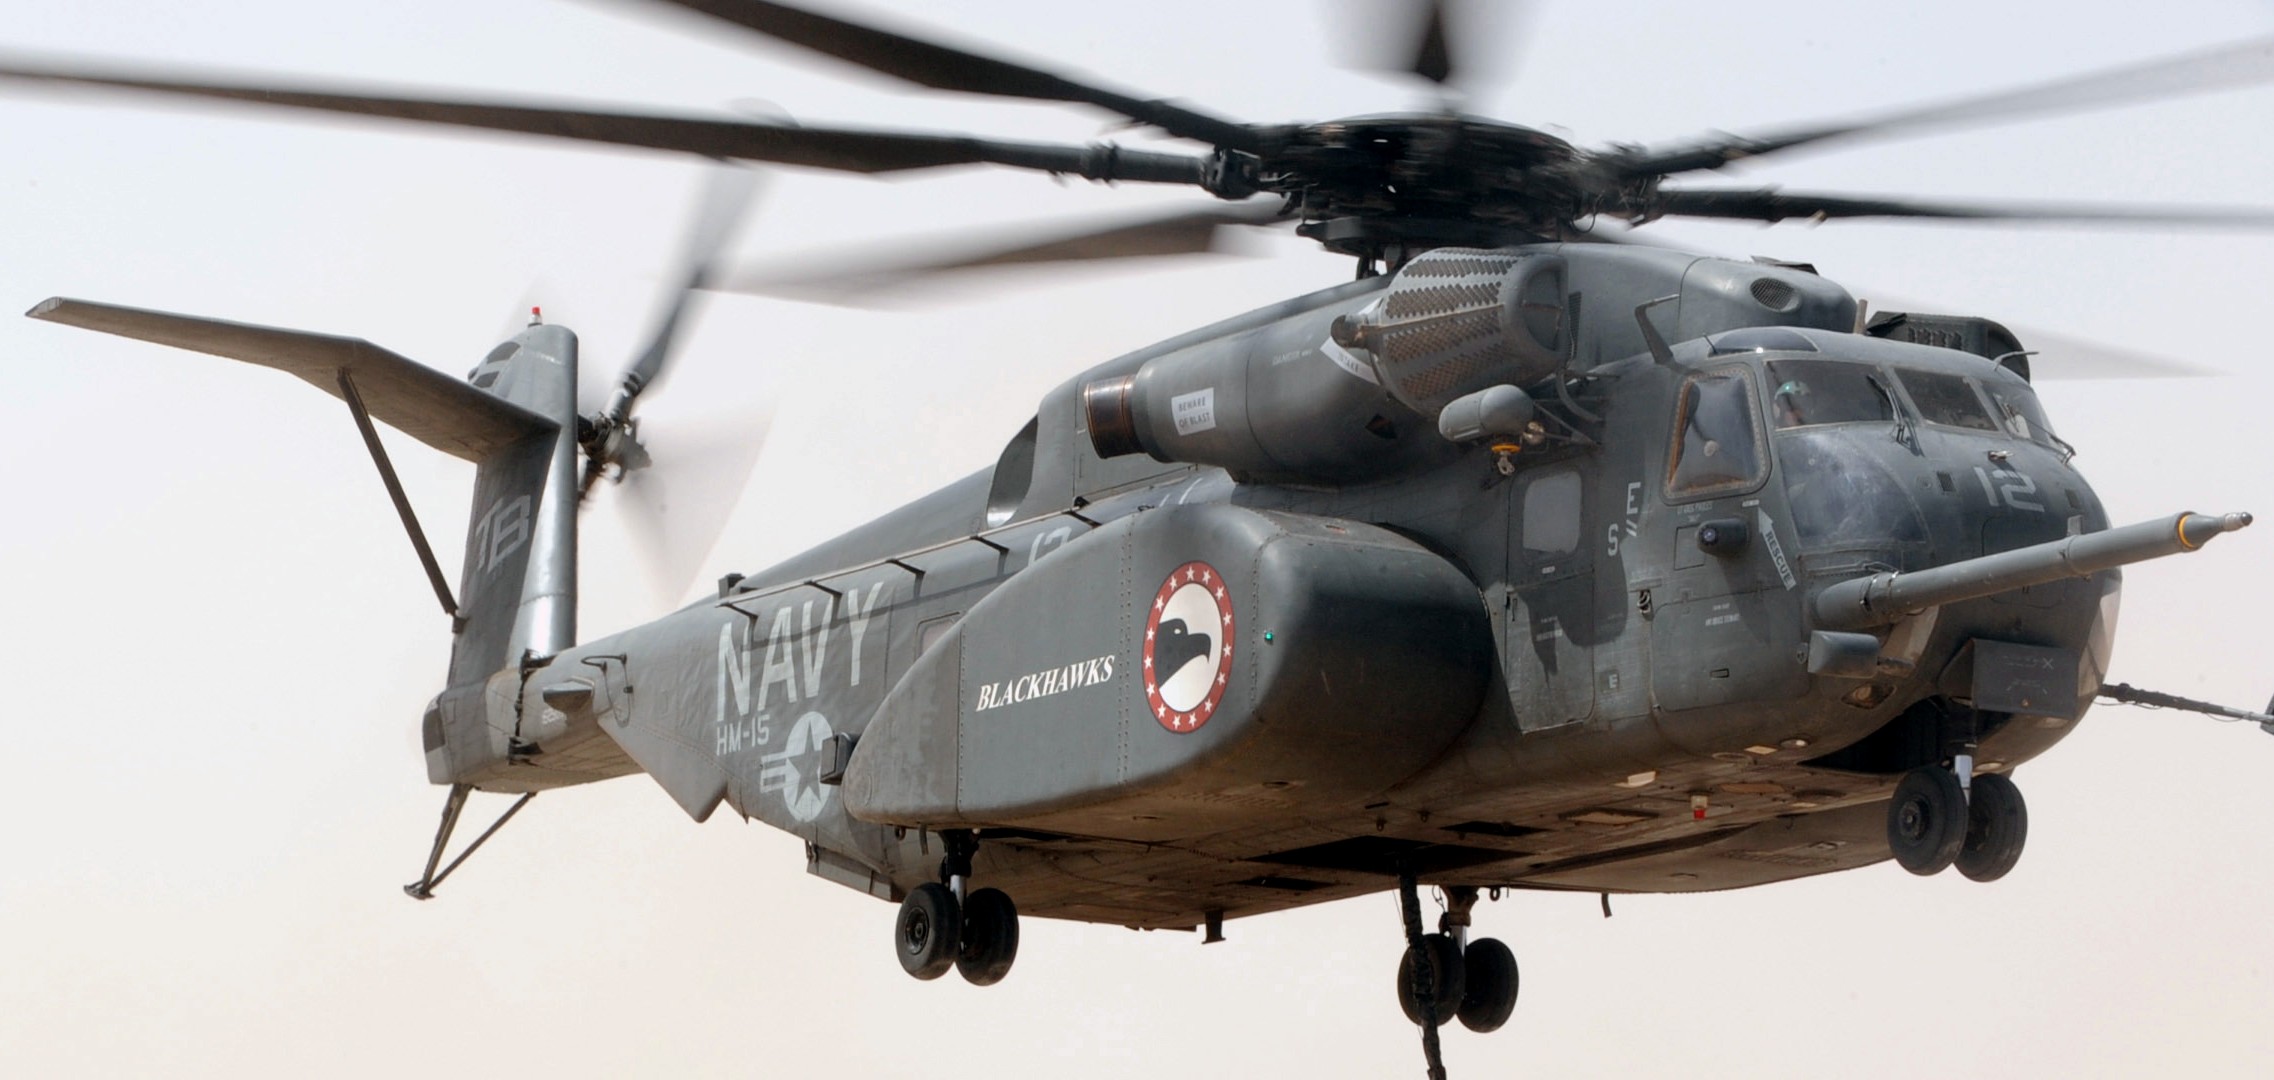 hm-15 blackhawks helicopter mine countermeasures squadron navy mh-53e sea dragon 66 middle east